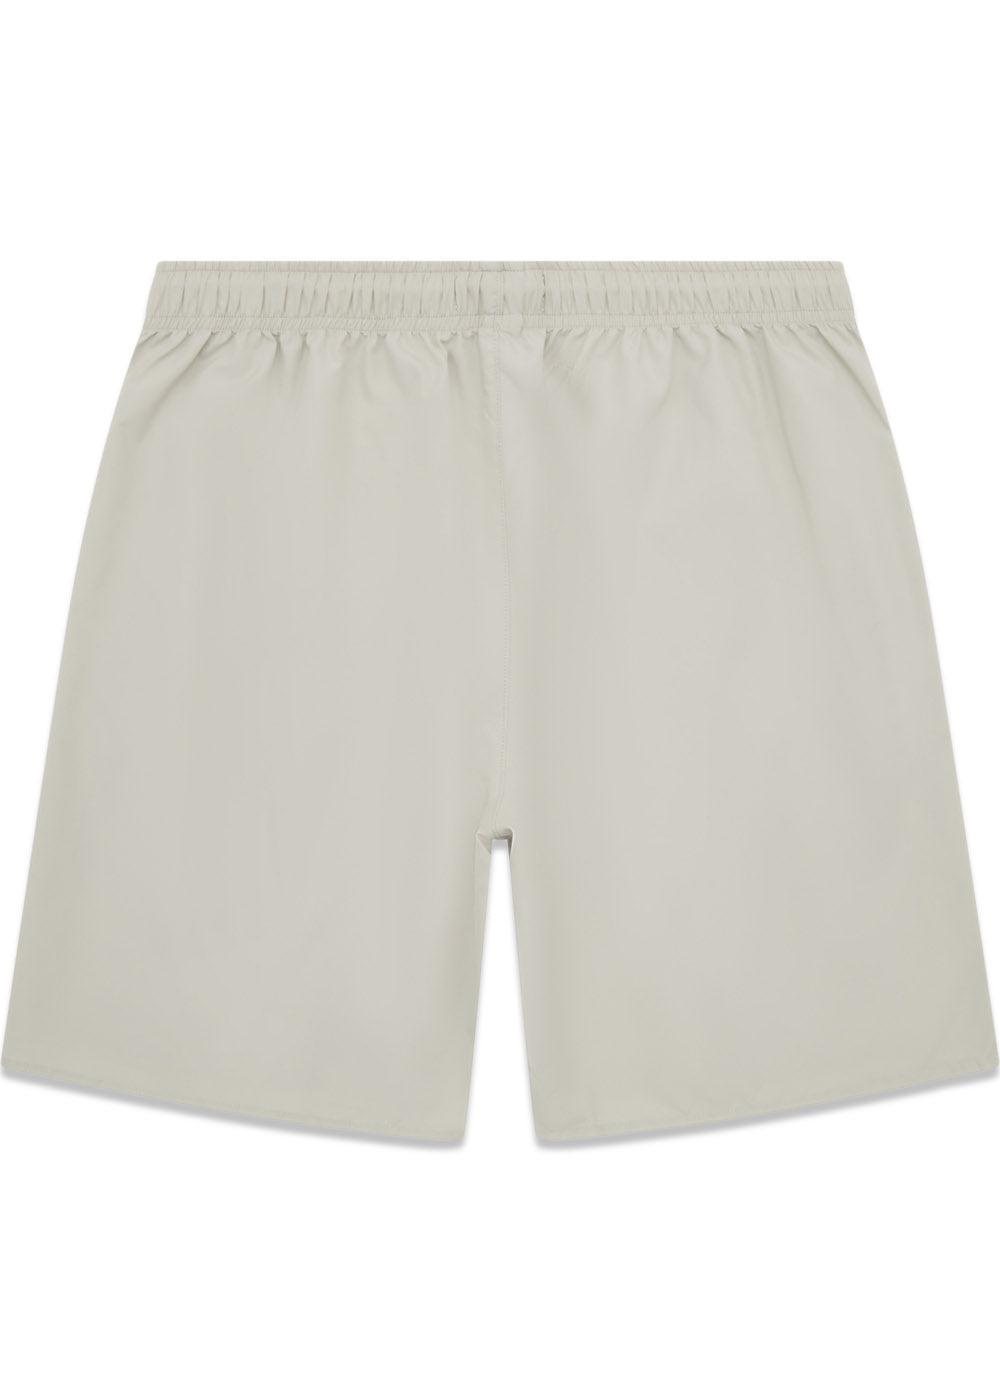 Haiden Tech Shorts - Light Grey